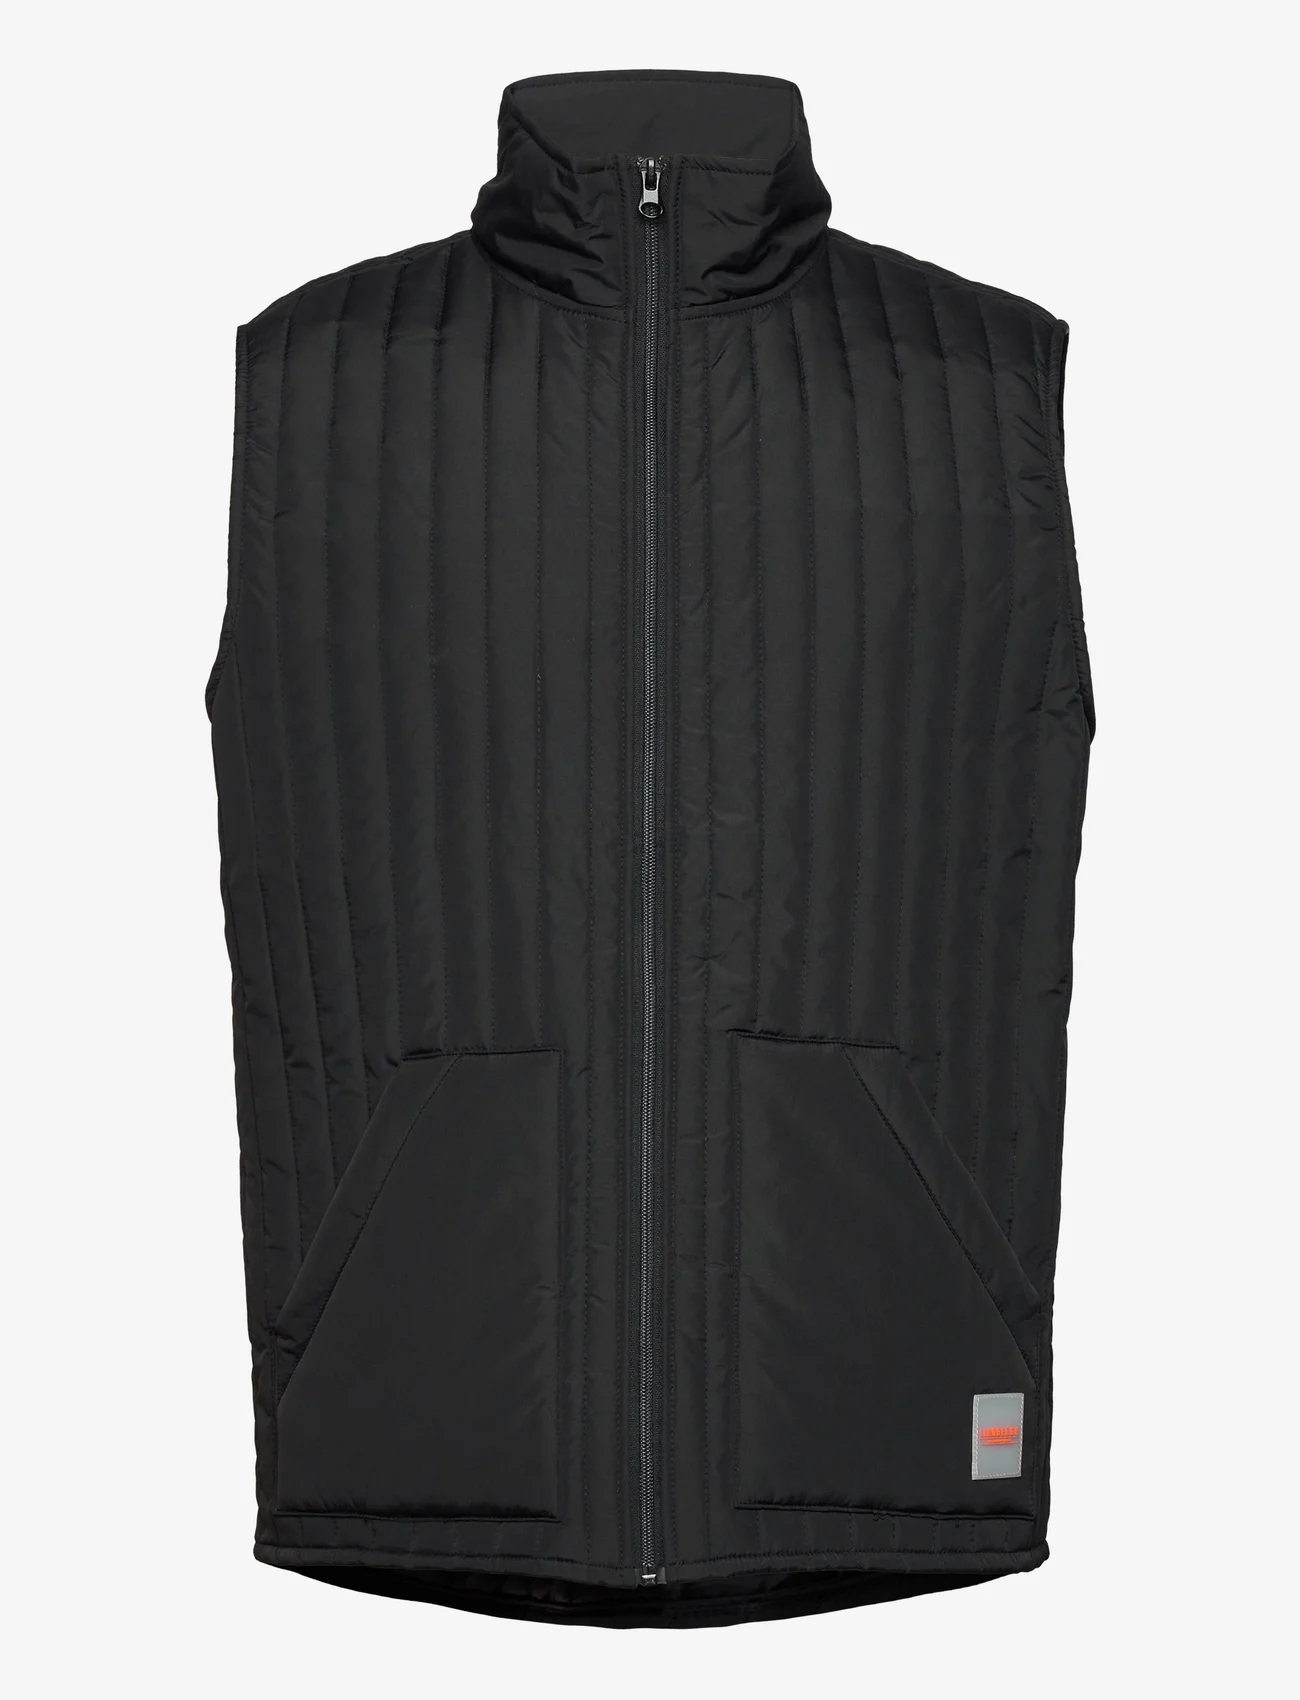 Lindbergh - Vertical quilted waistcoat - liivit - black - 0